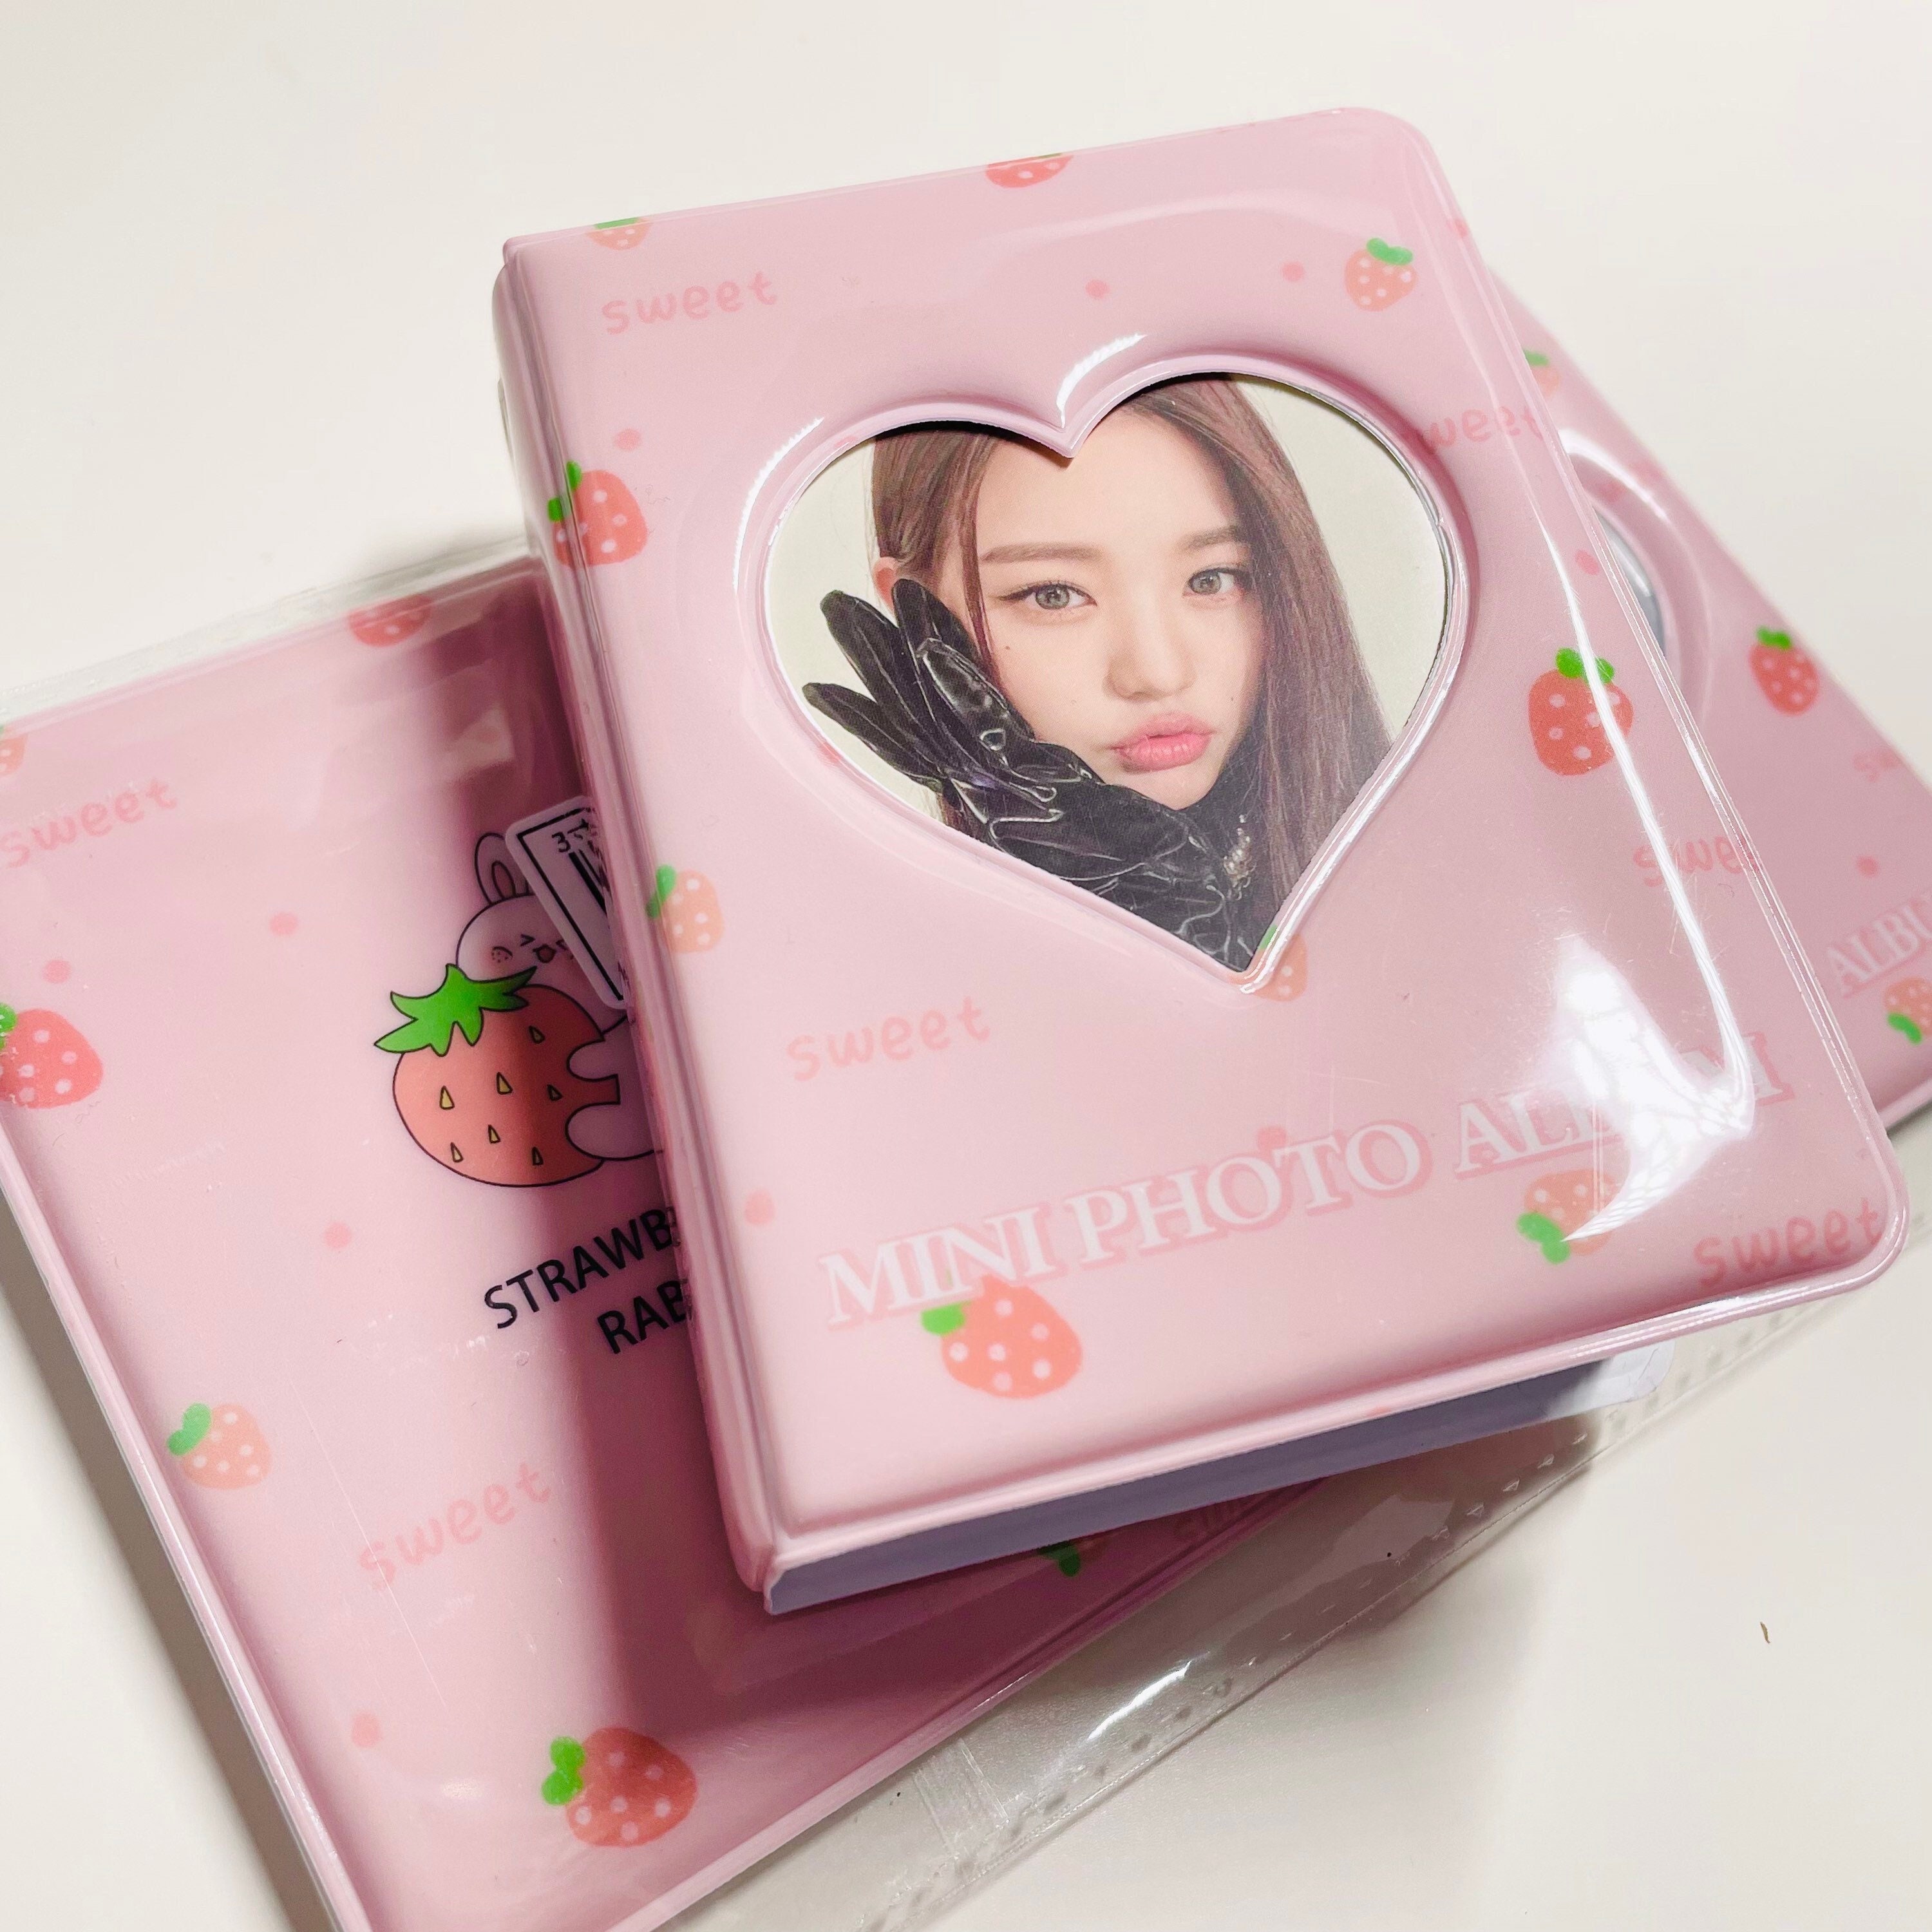 Mini Size Kpop Photo Card Collect Album, 3 Inch 1 Pocket Photo